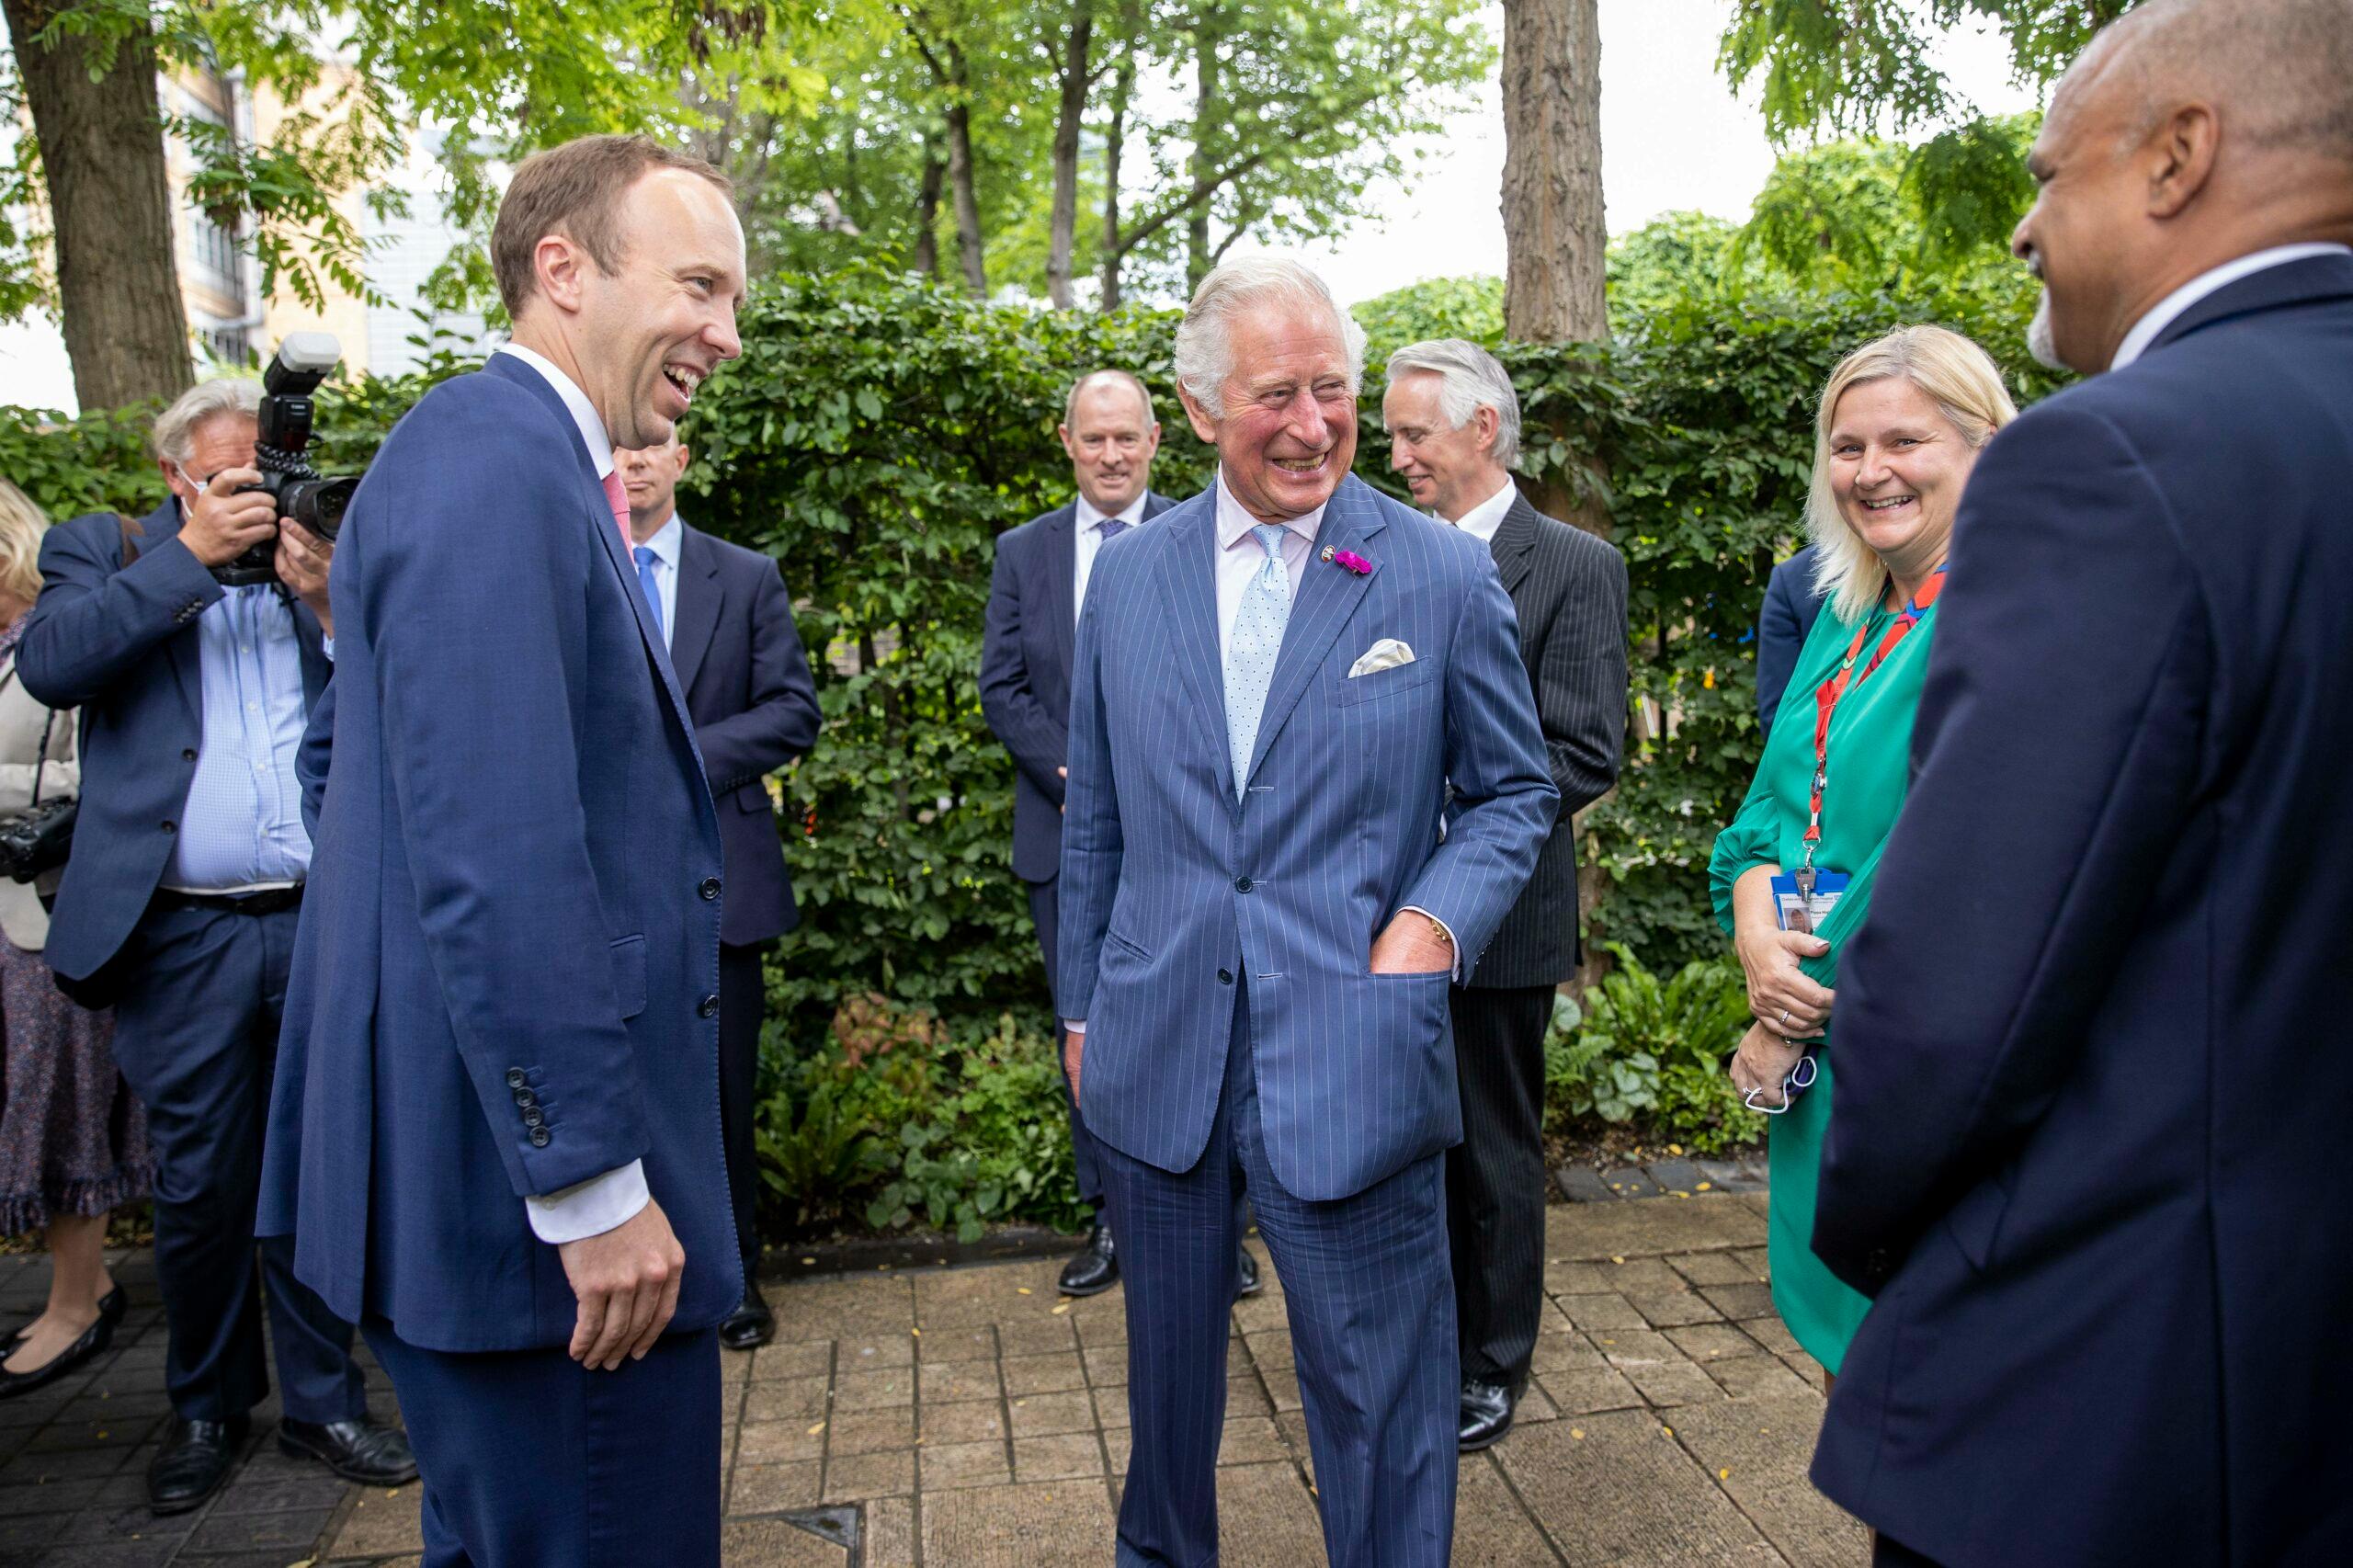 Prince Charles HRH Prince of Wales with Health secretary Matt Hancock meeting NHS staff